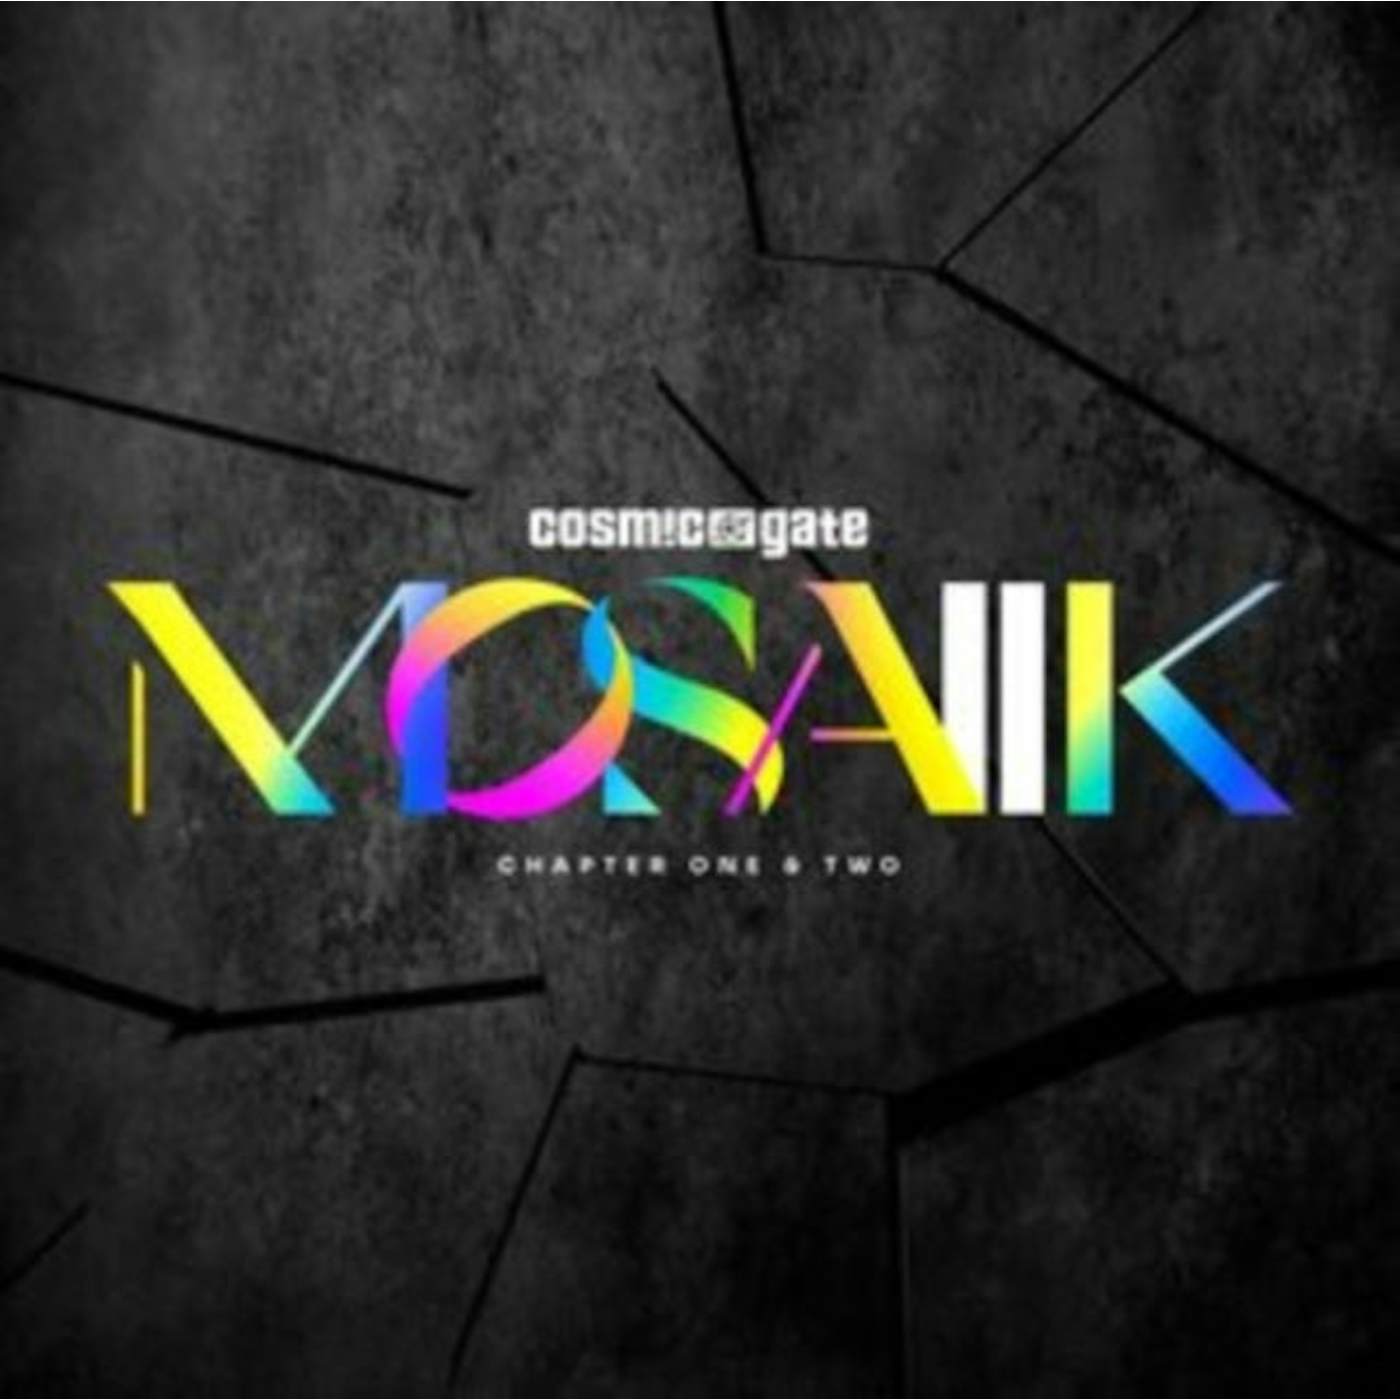 Cosmic Gate LP - Mosaiik (Vinyl)